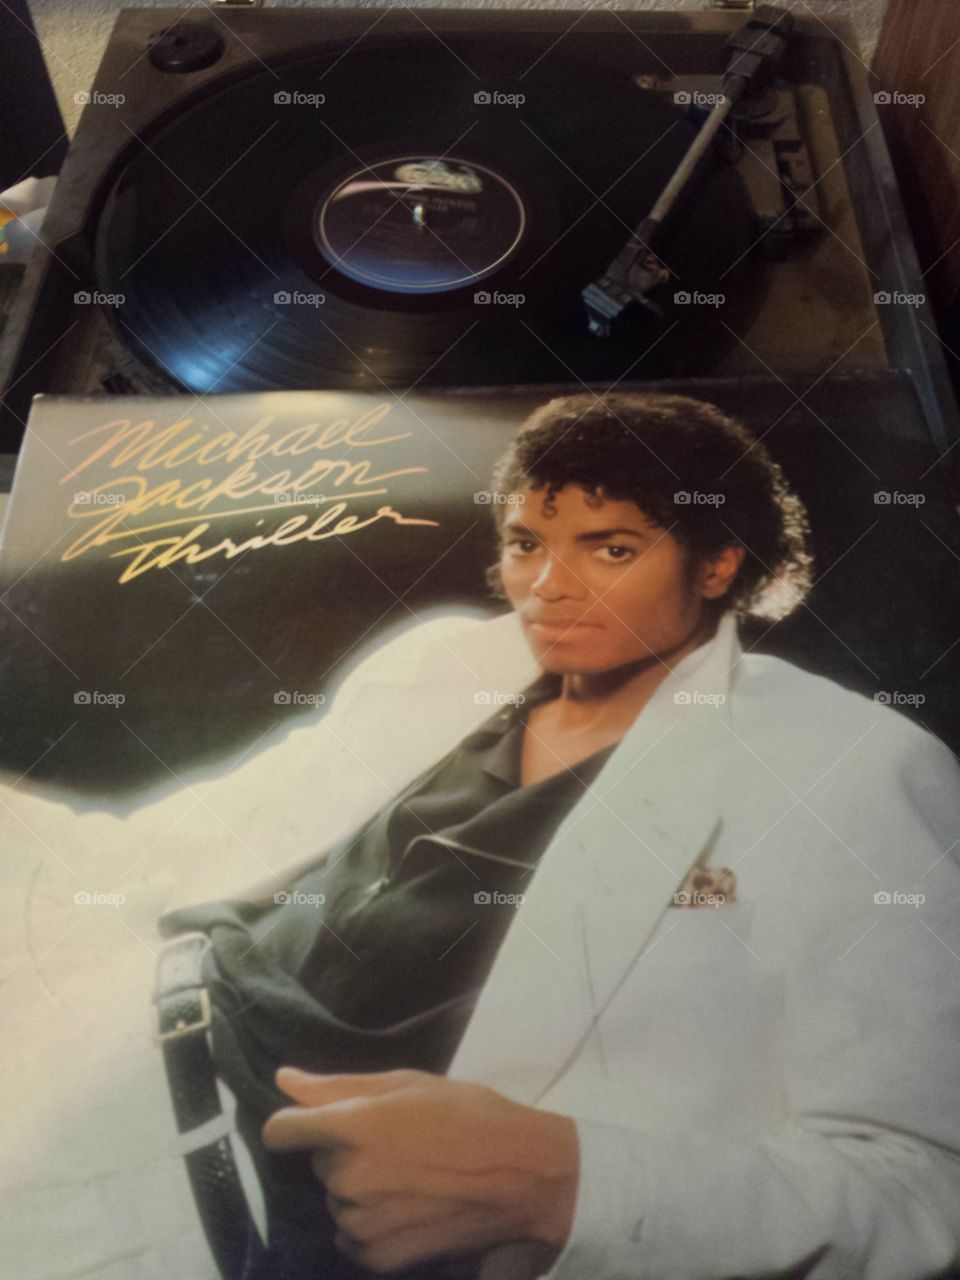 Michael Jackson "Thriller"